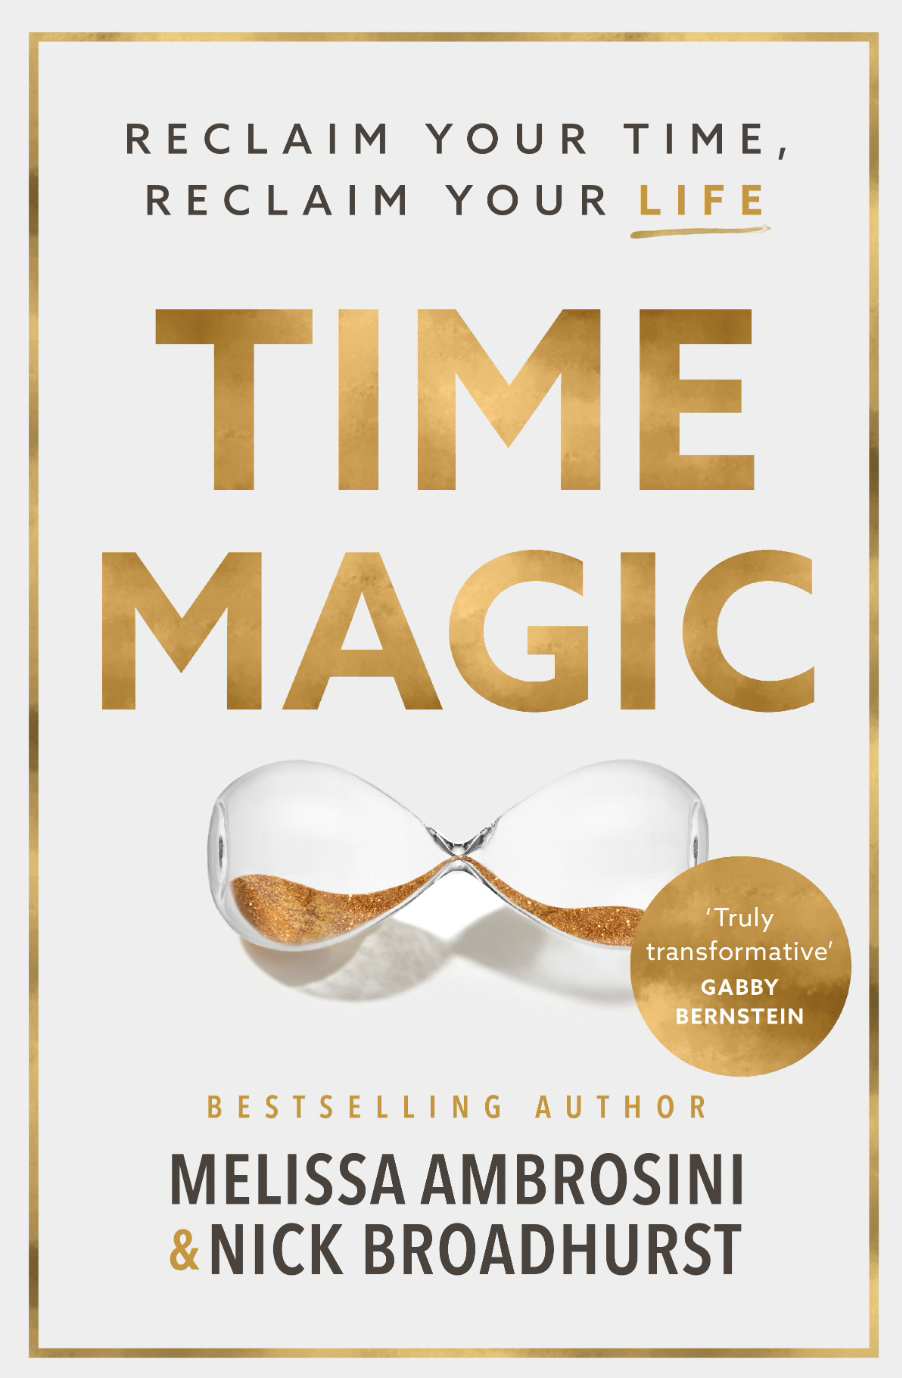 Time Magic - Melissa Ambrosini and Nick Broadhurst